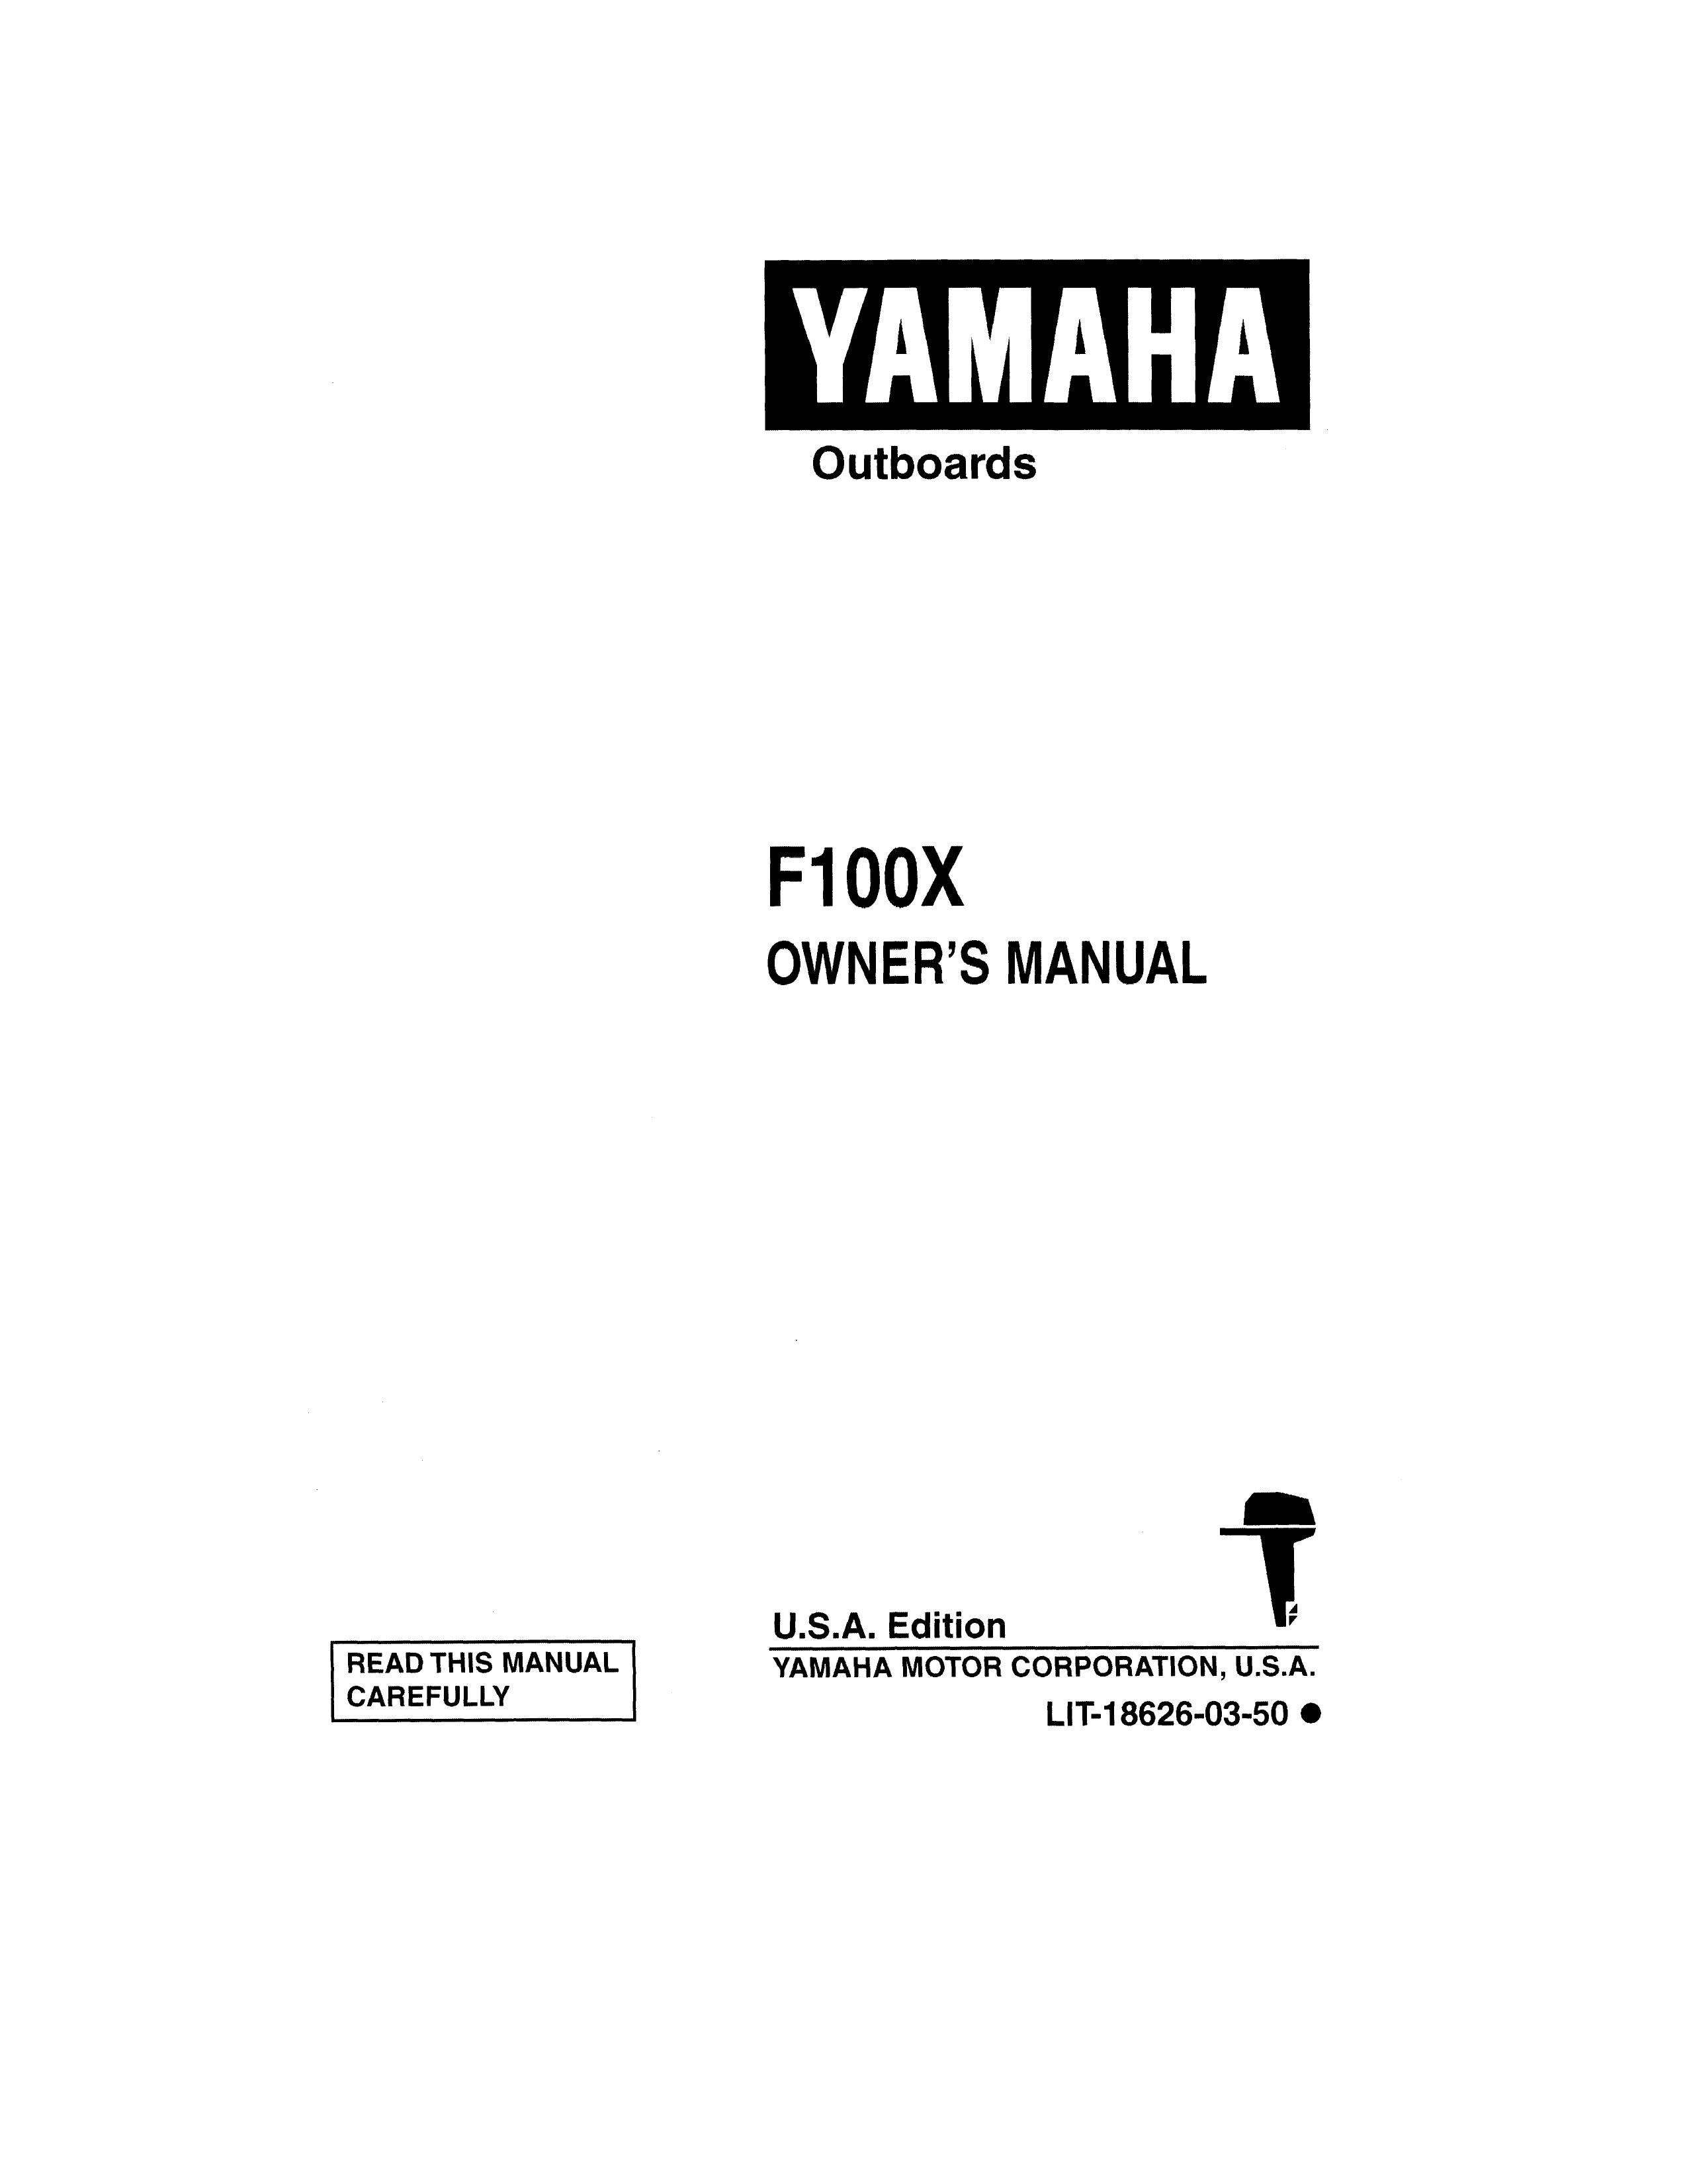 Yamaha F100X Outboard Motor User Manual